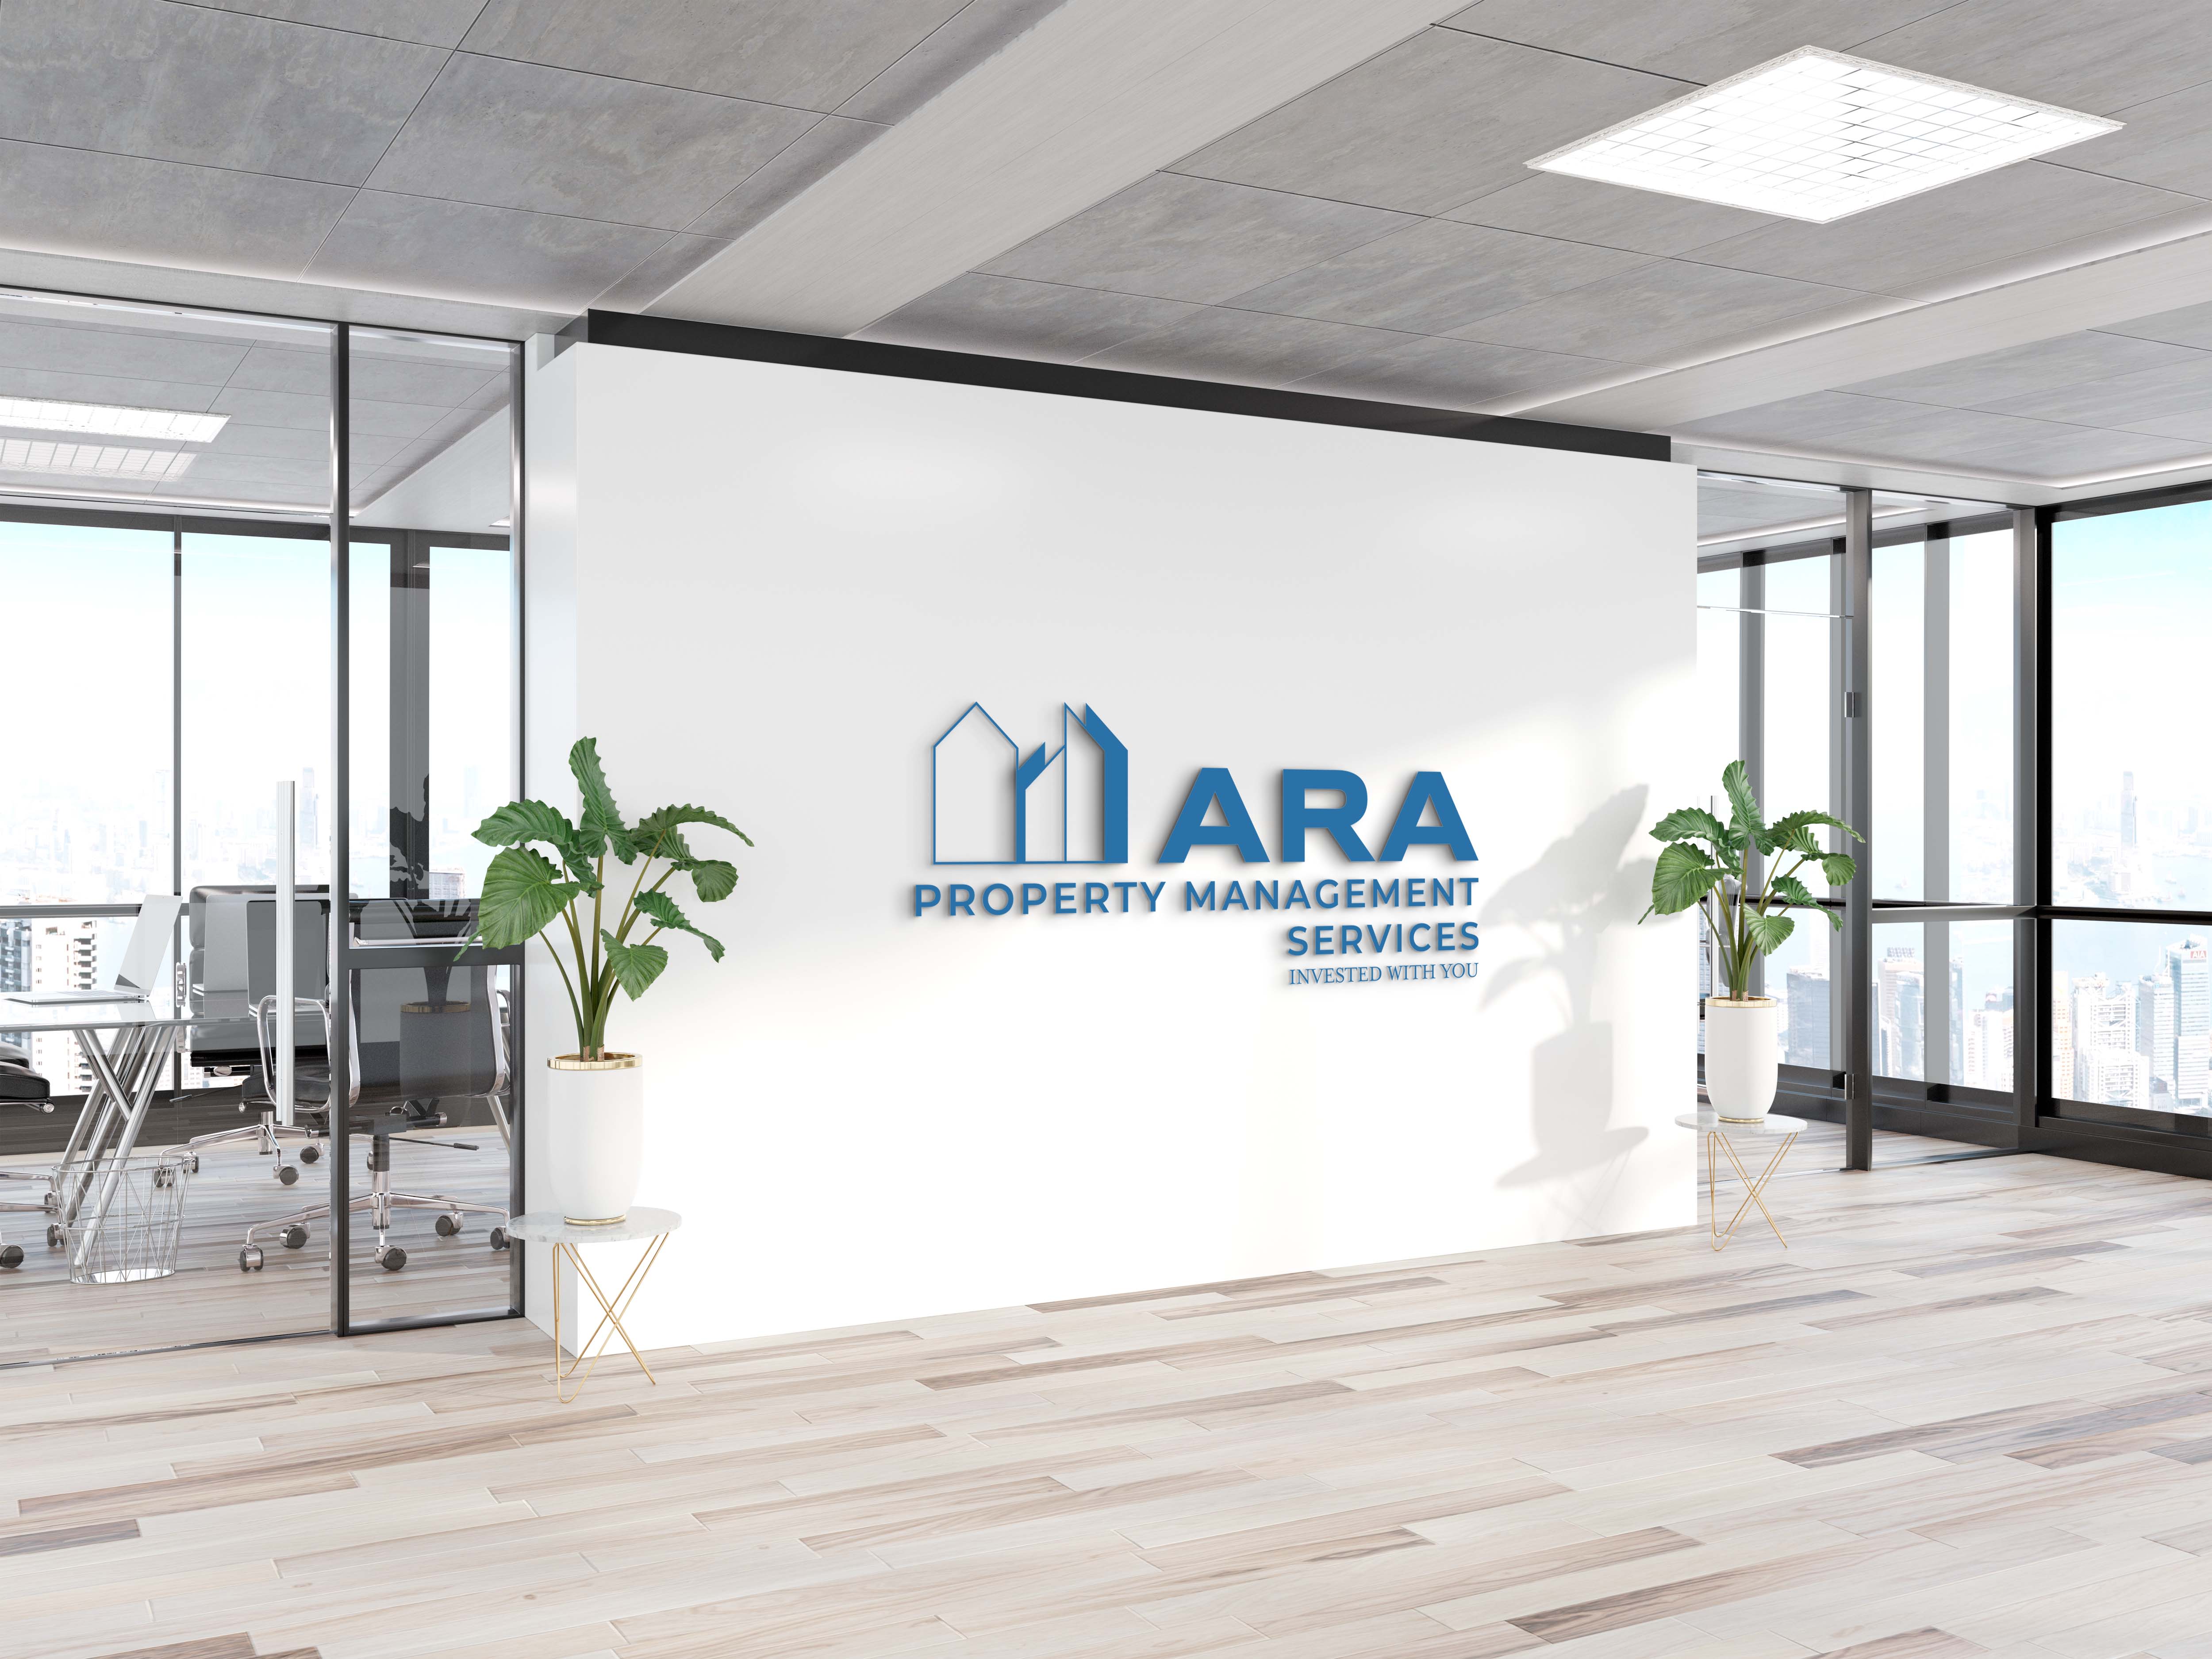 ARA Property Management Services logo